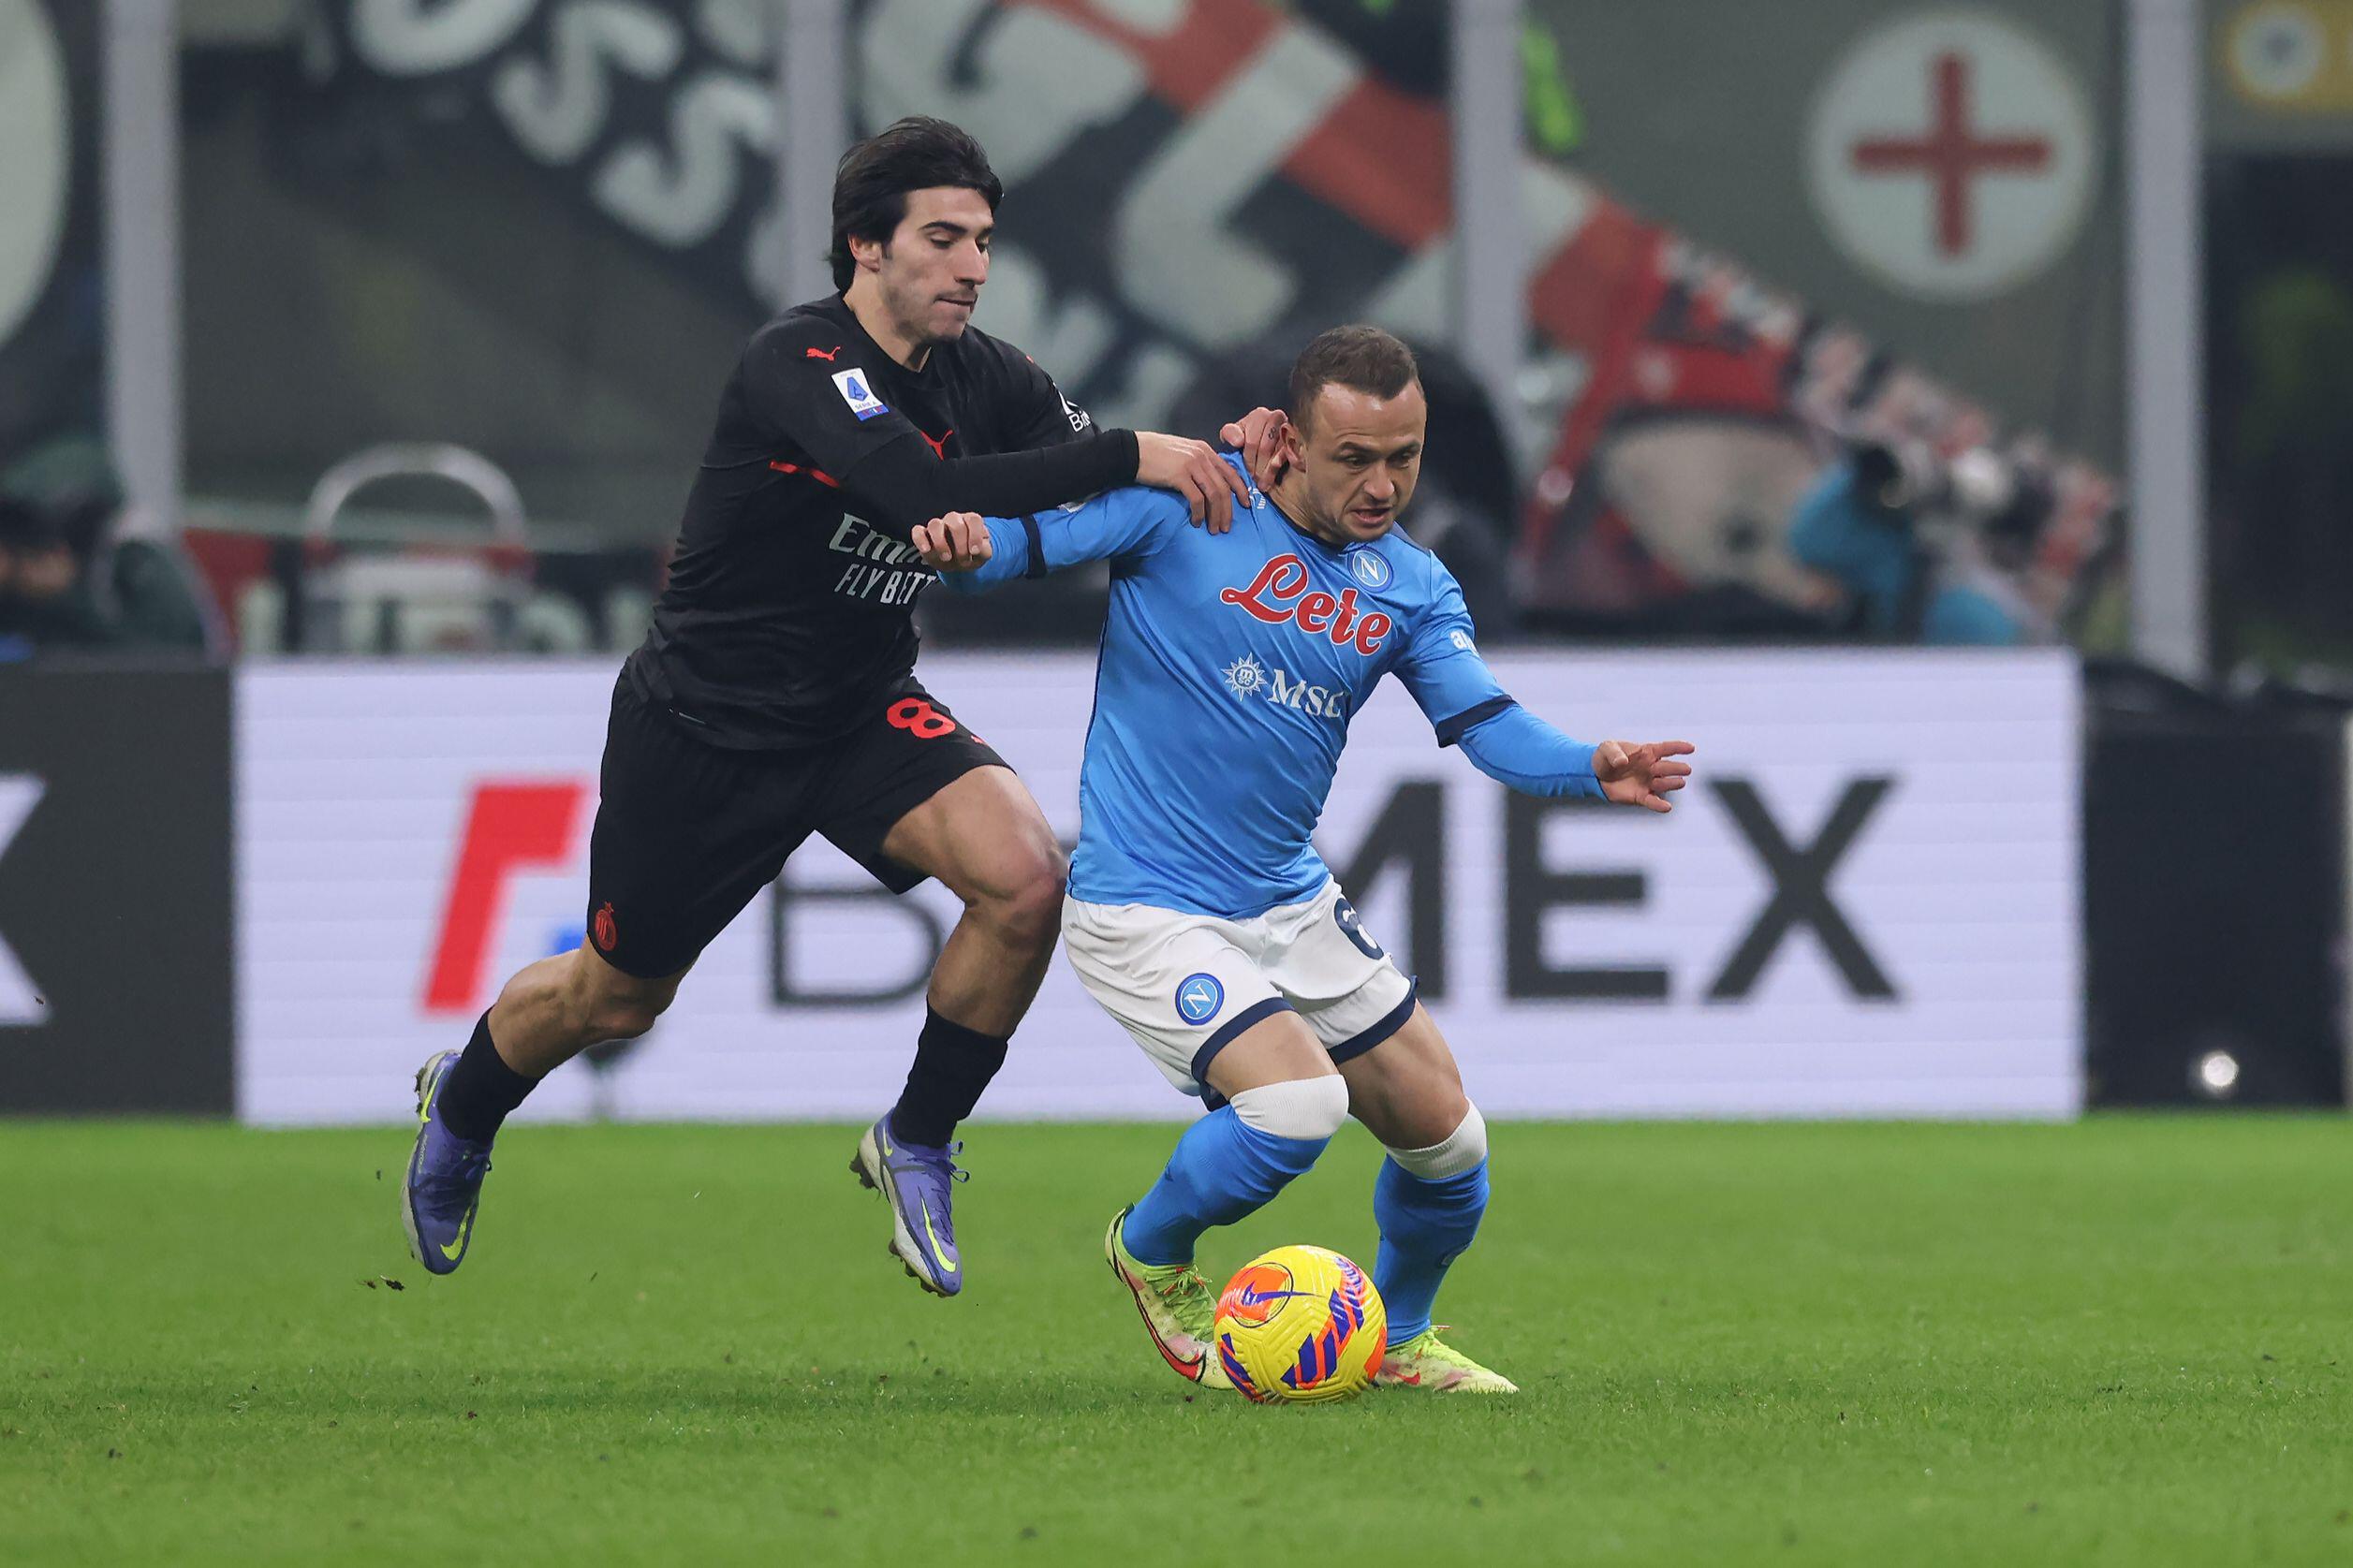 Napoli - AC Milan, 0-1, Digi Sport 2. Milanezii trec în avantaj. Giroud iese accidentat